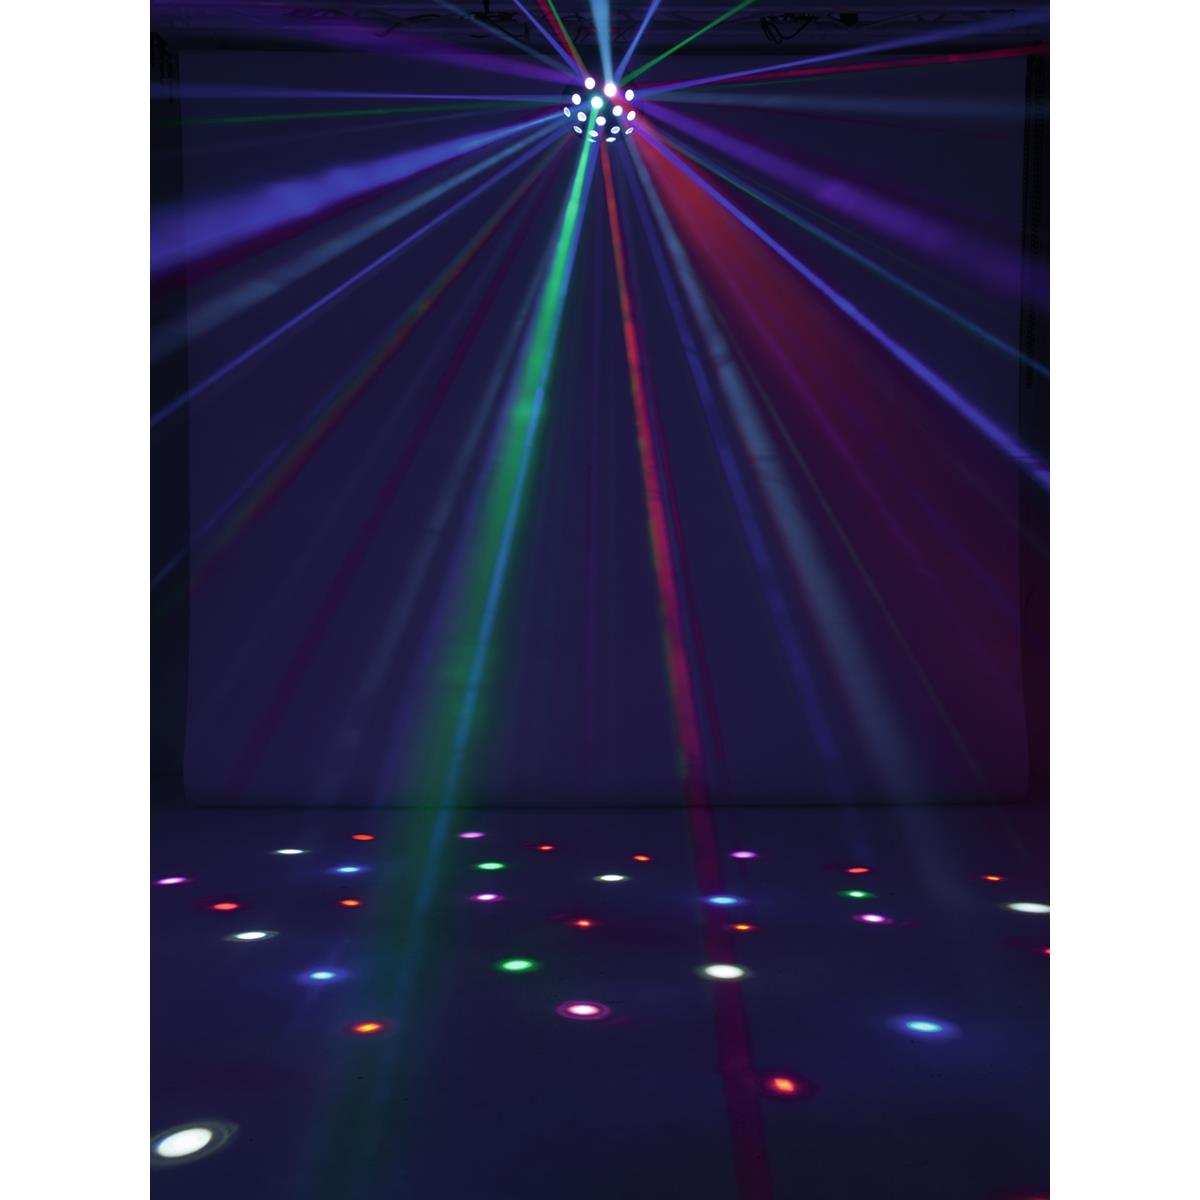 LED Strahleneffekt "Z-1000" - raumfüllender Pilzkopf-Effekt - Auto, DMX, Musik - 6-farb LEDs